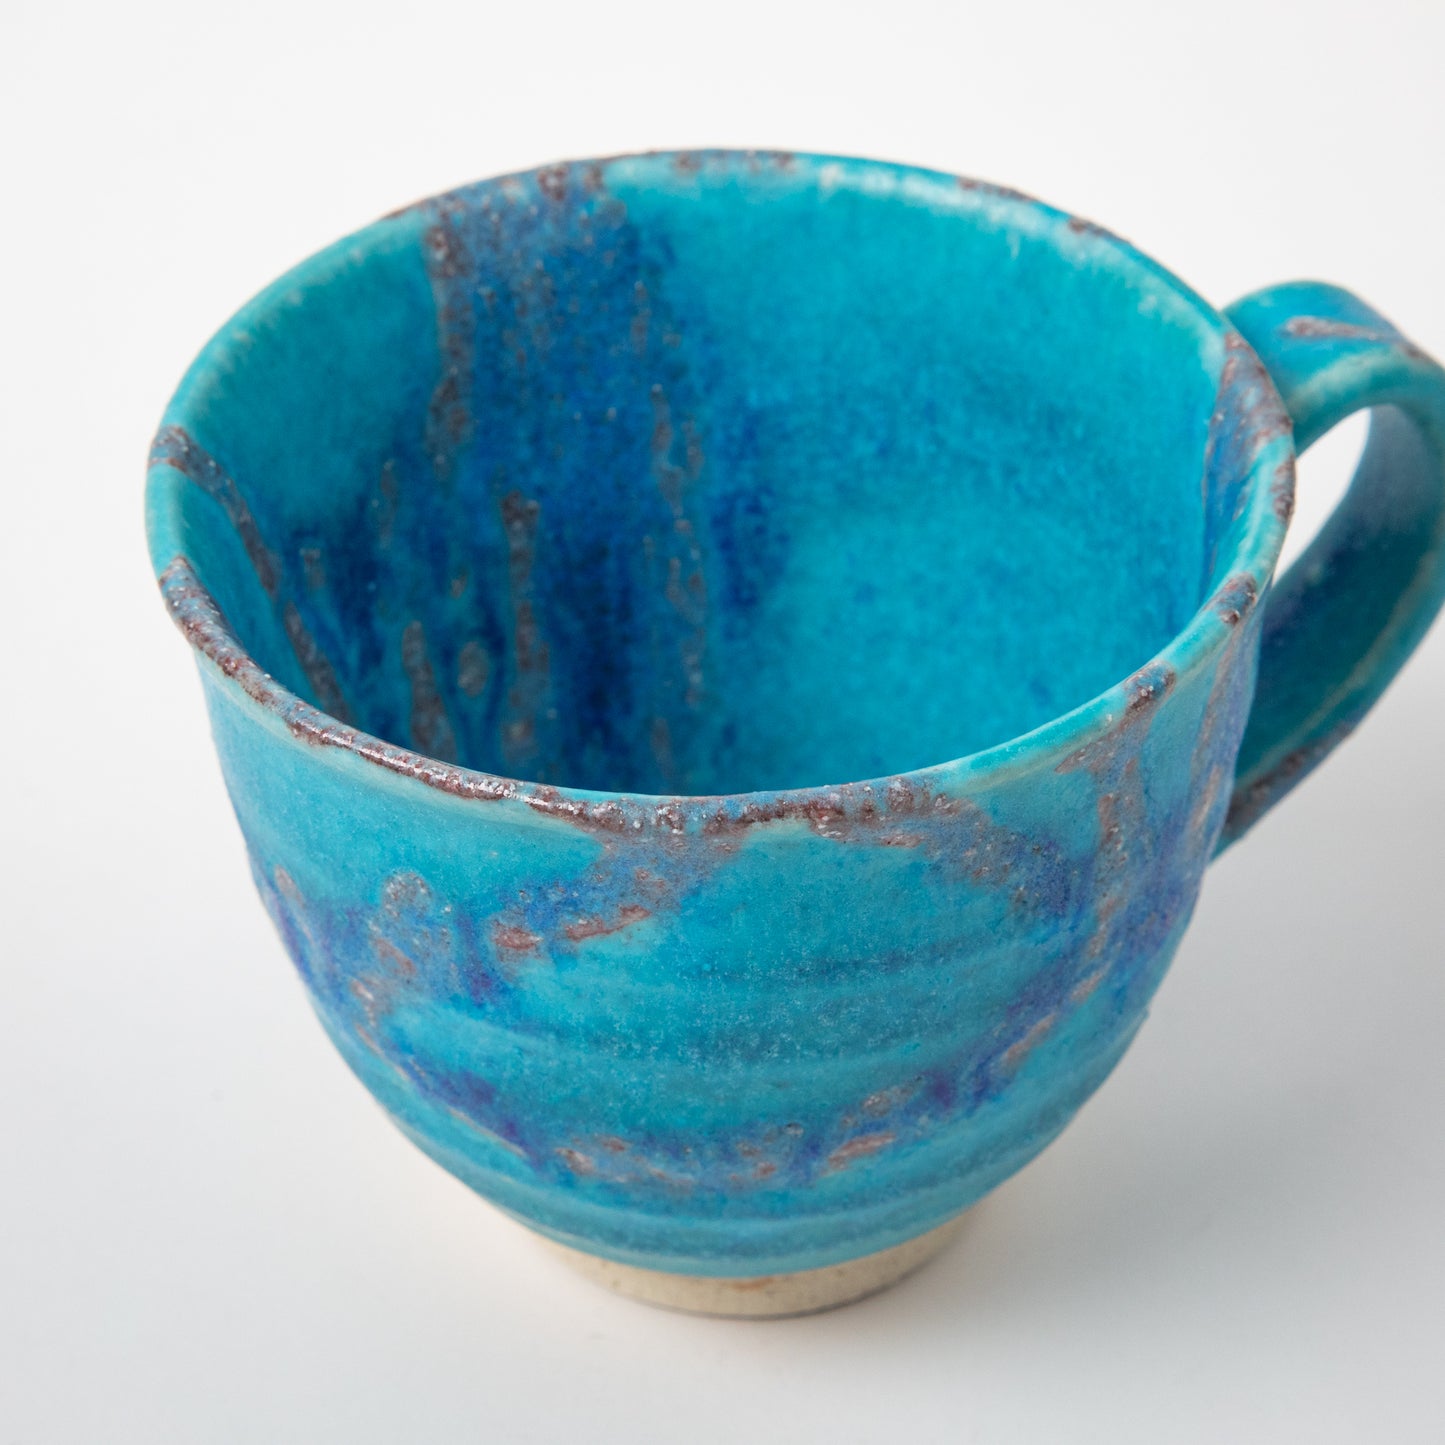 Inside of rquoise blue Shigaraki-ware Tsuyukusa mug cup